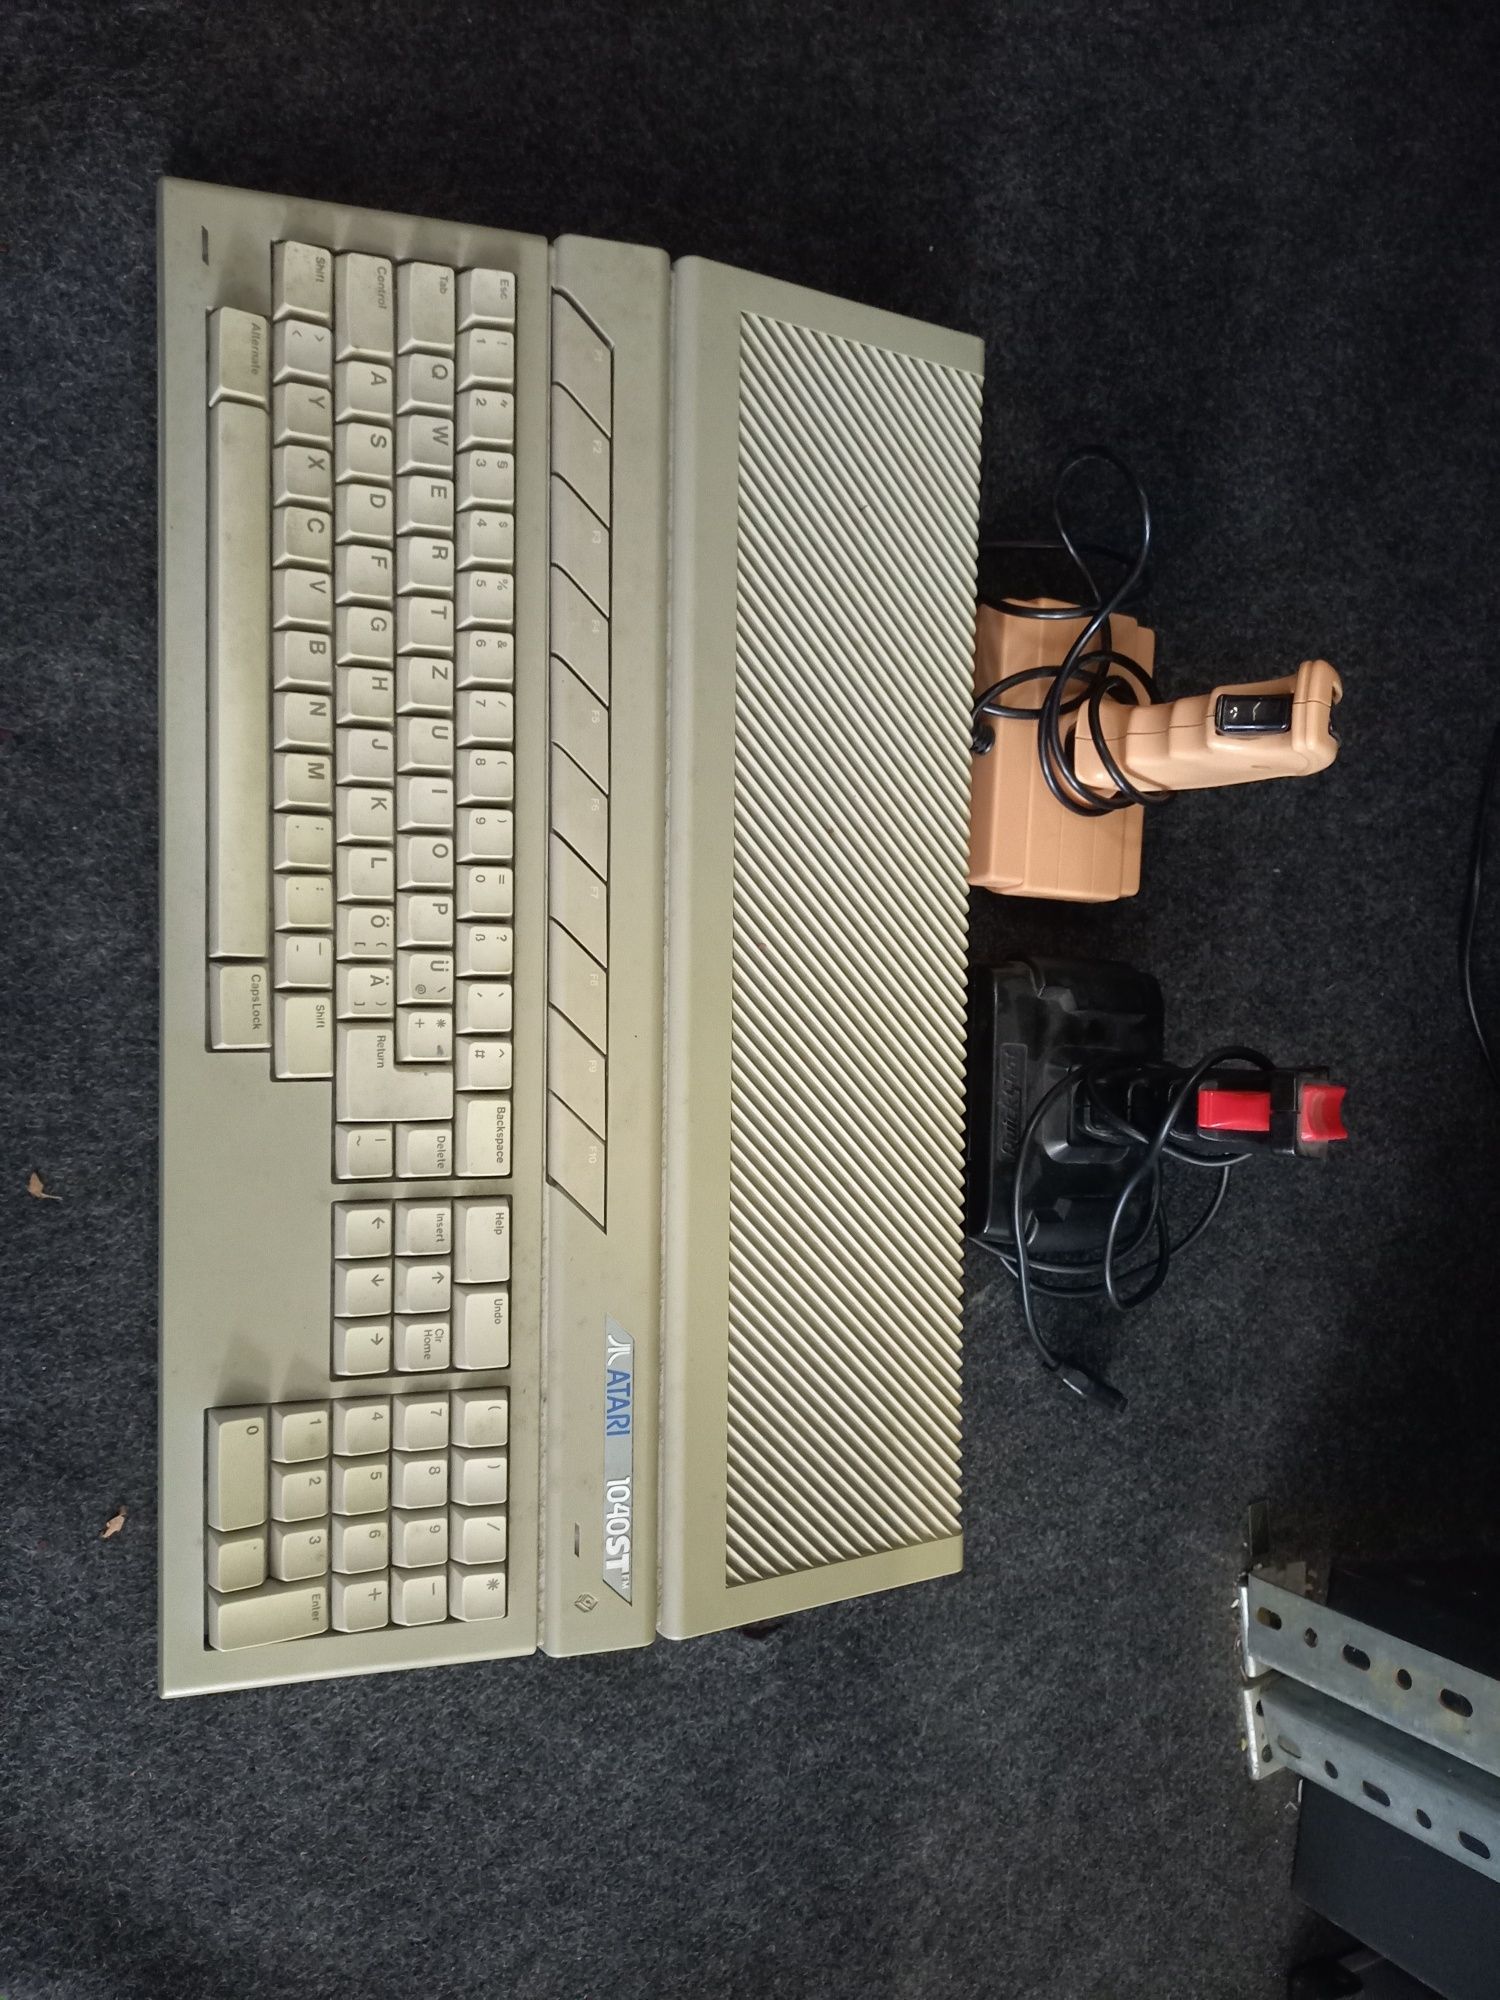 Commodore 64   atari 1040st